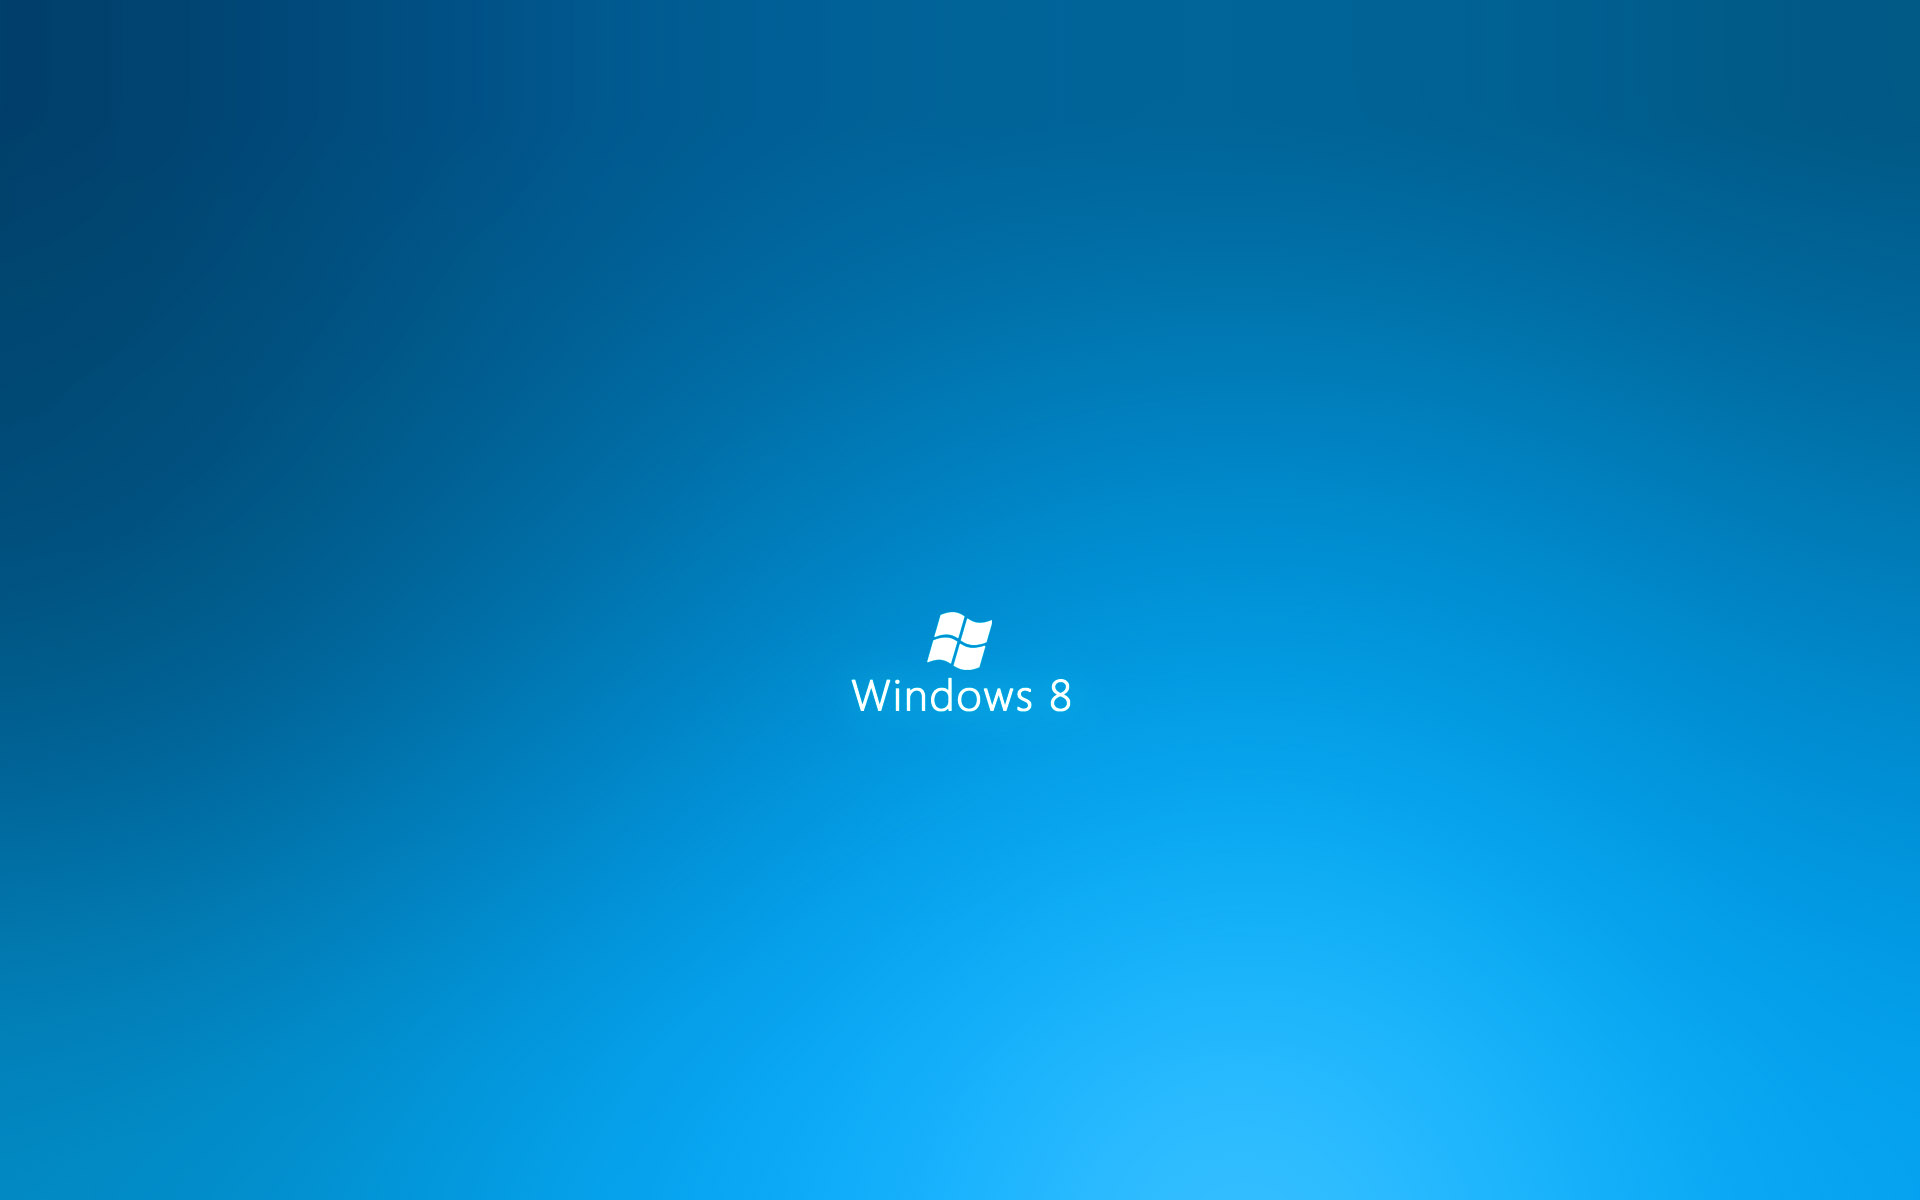 Clear Blue Windows 8 1920x1200 WIDE Image Computers Windows 8 1920x1200